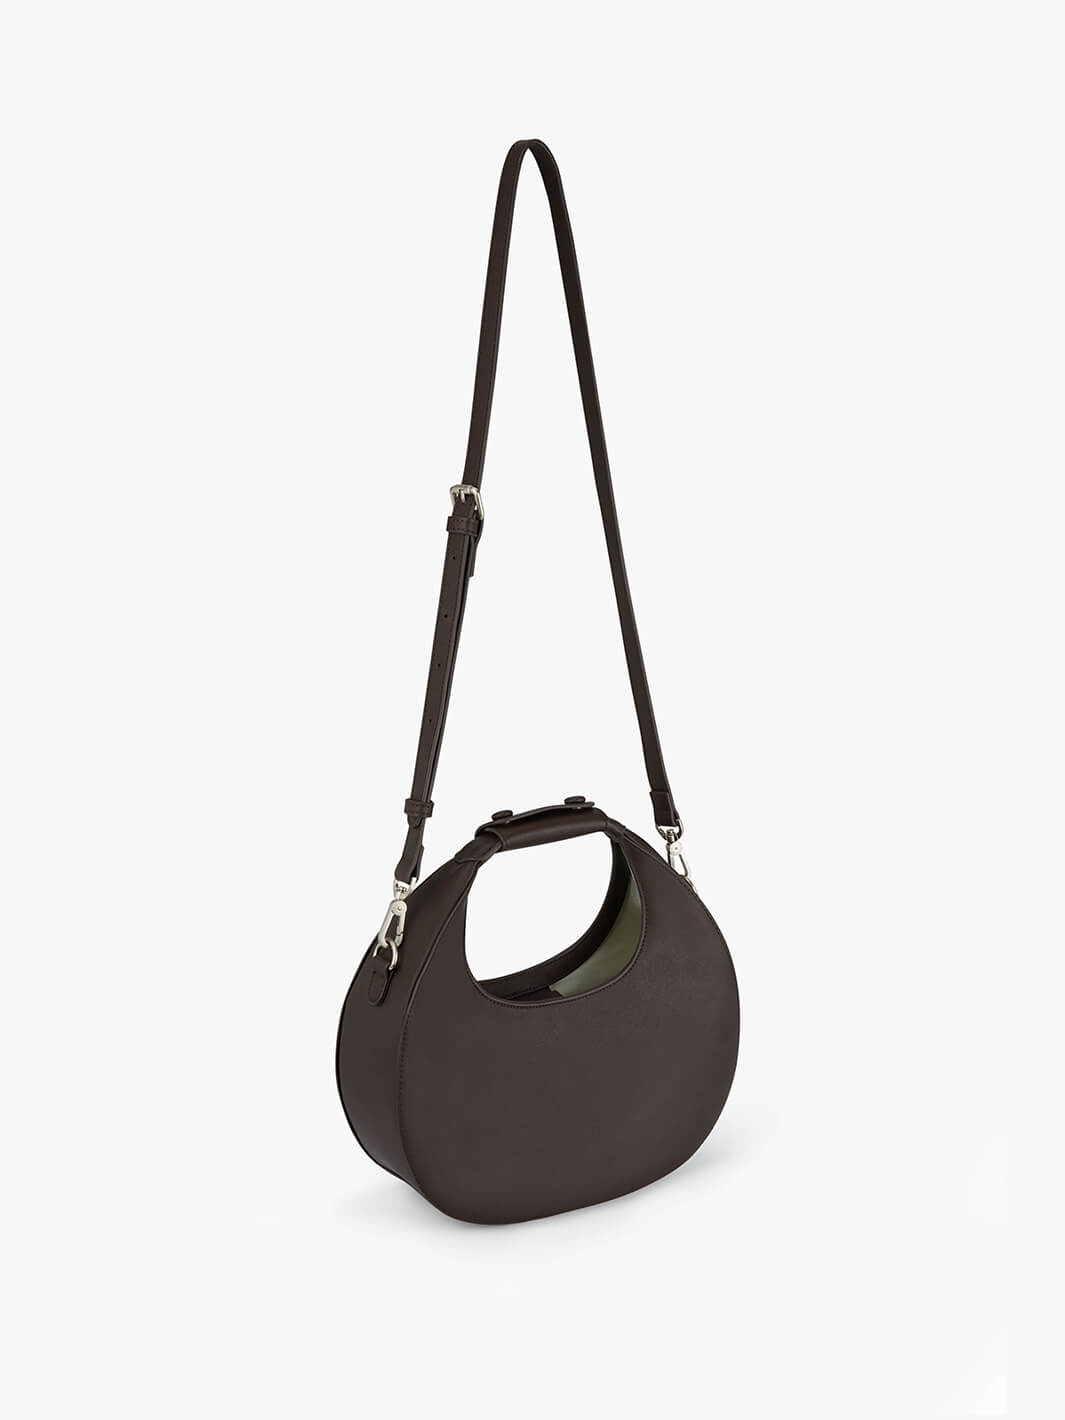 Selene Shoulder Bag Made From Italy Genuine Leather Bag 